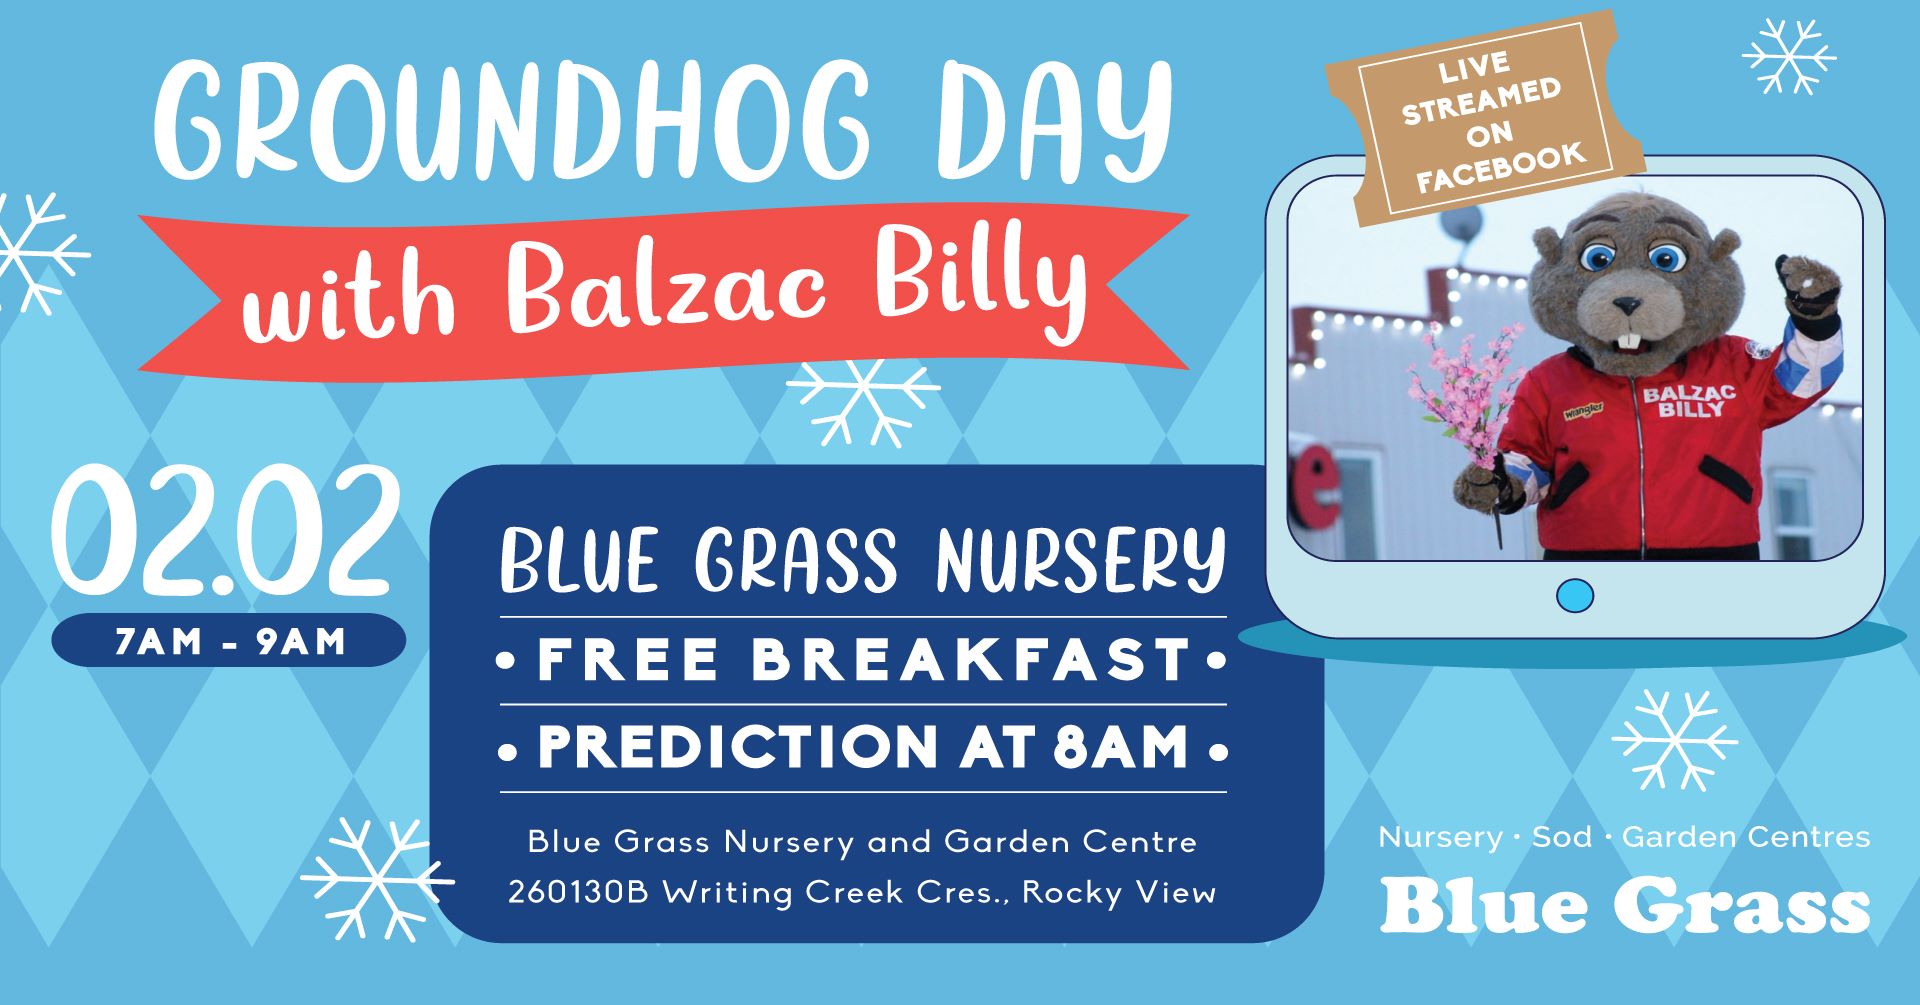 Groundhog Day 2024 with Balzac Billy airdrielife magazine